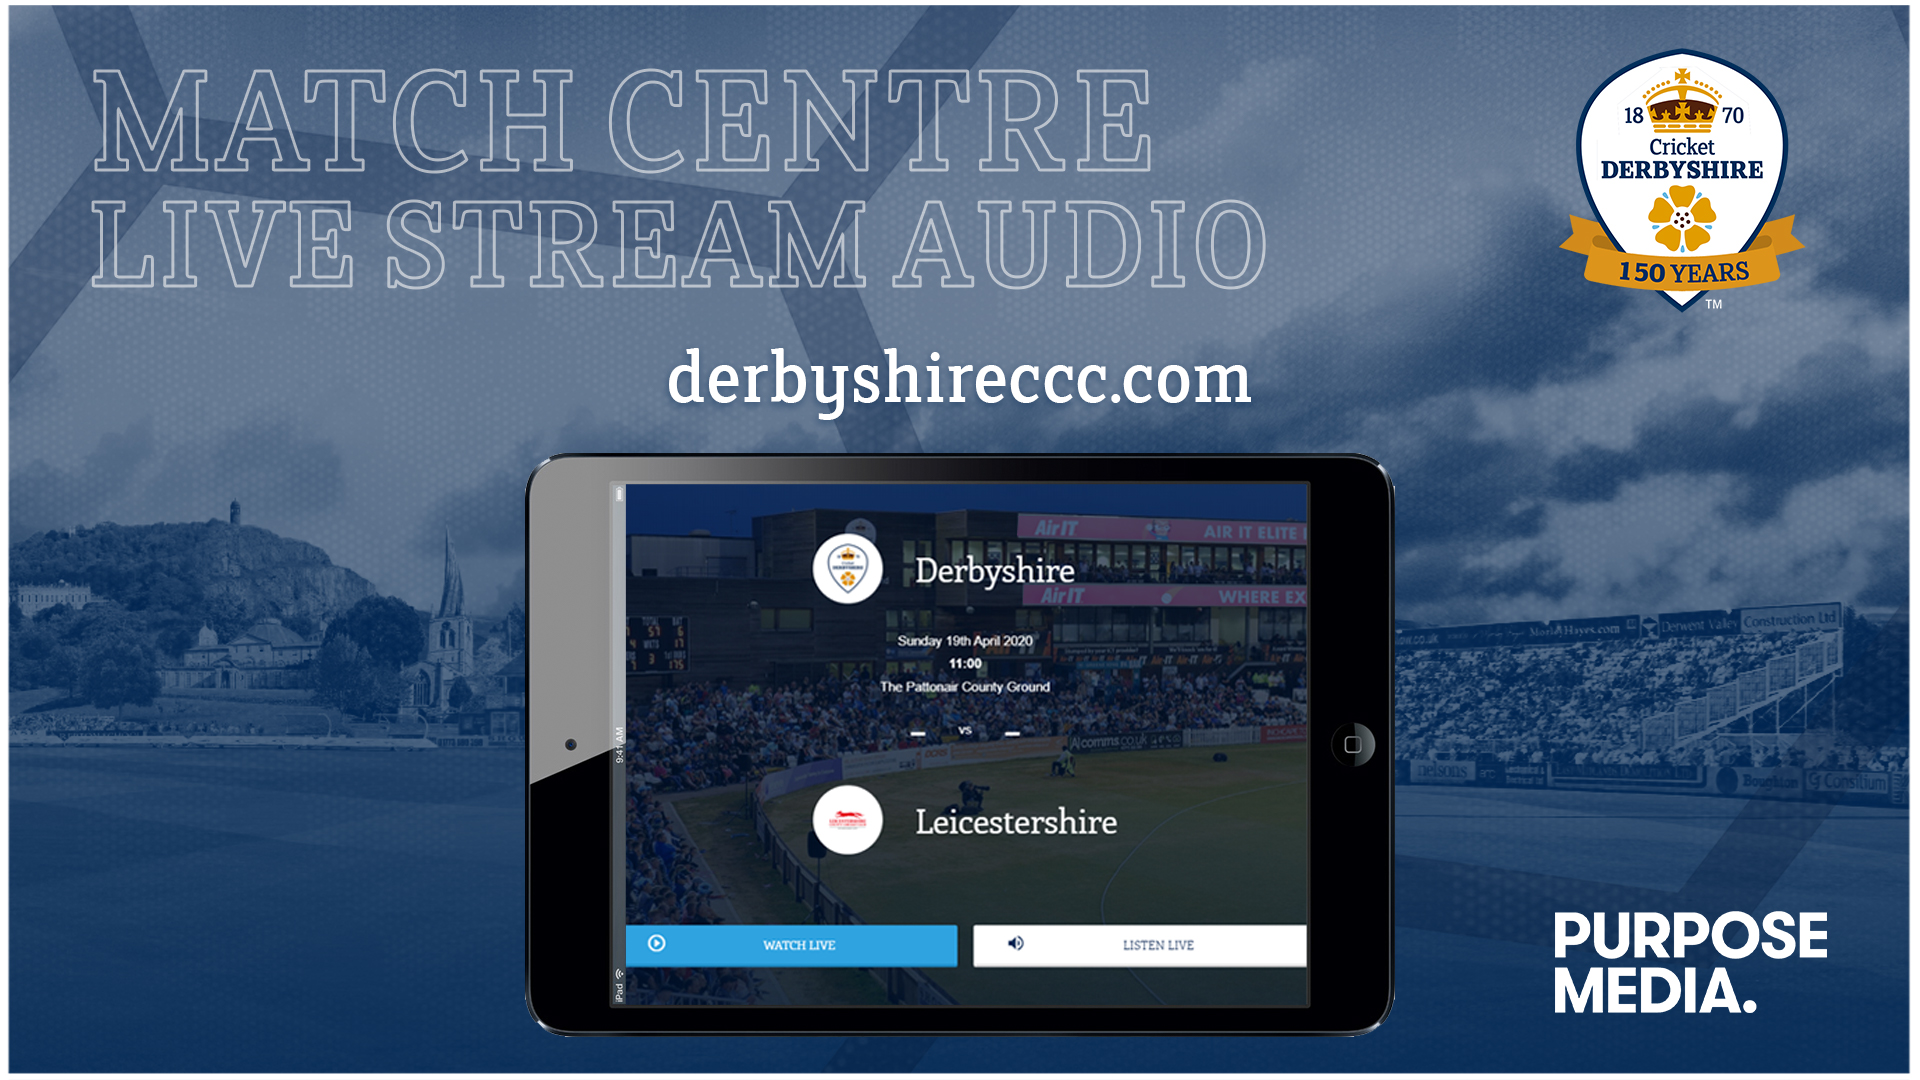 Live Stream audio added to Match Centre